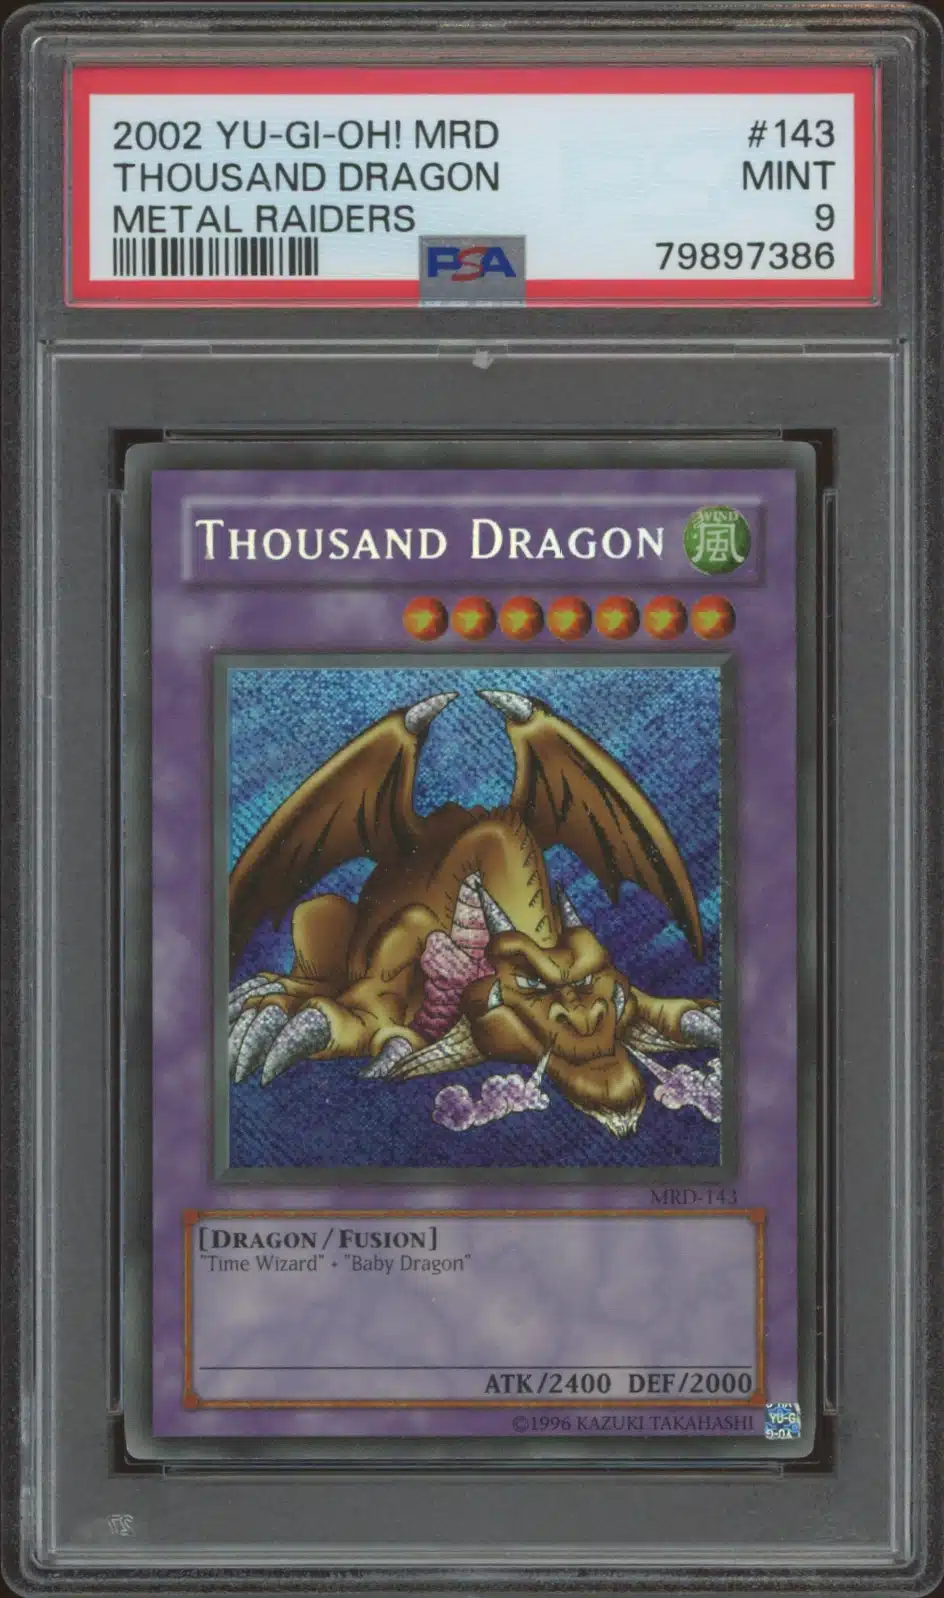 2002 Yu-Gi-Oh! Metal Raiders Thousand Dragon #MRD-143 (PSA 9) (Front)